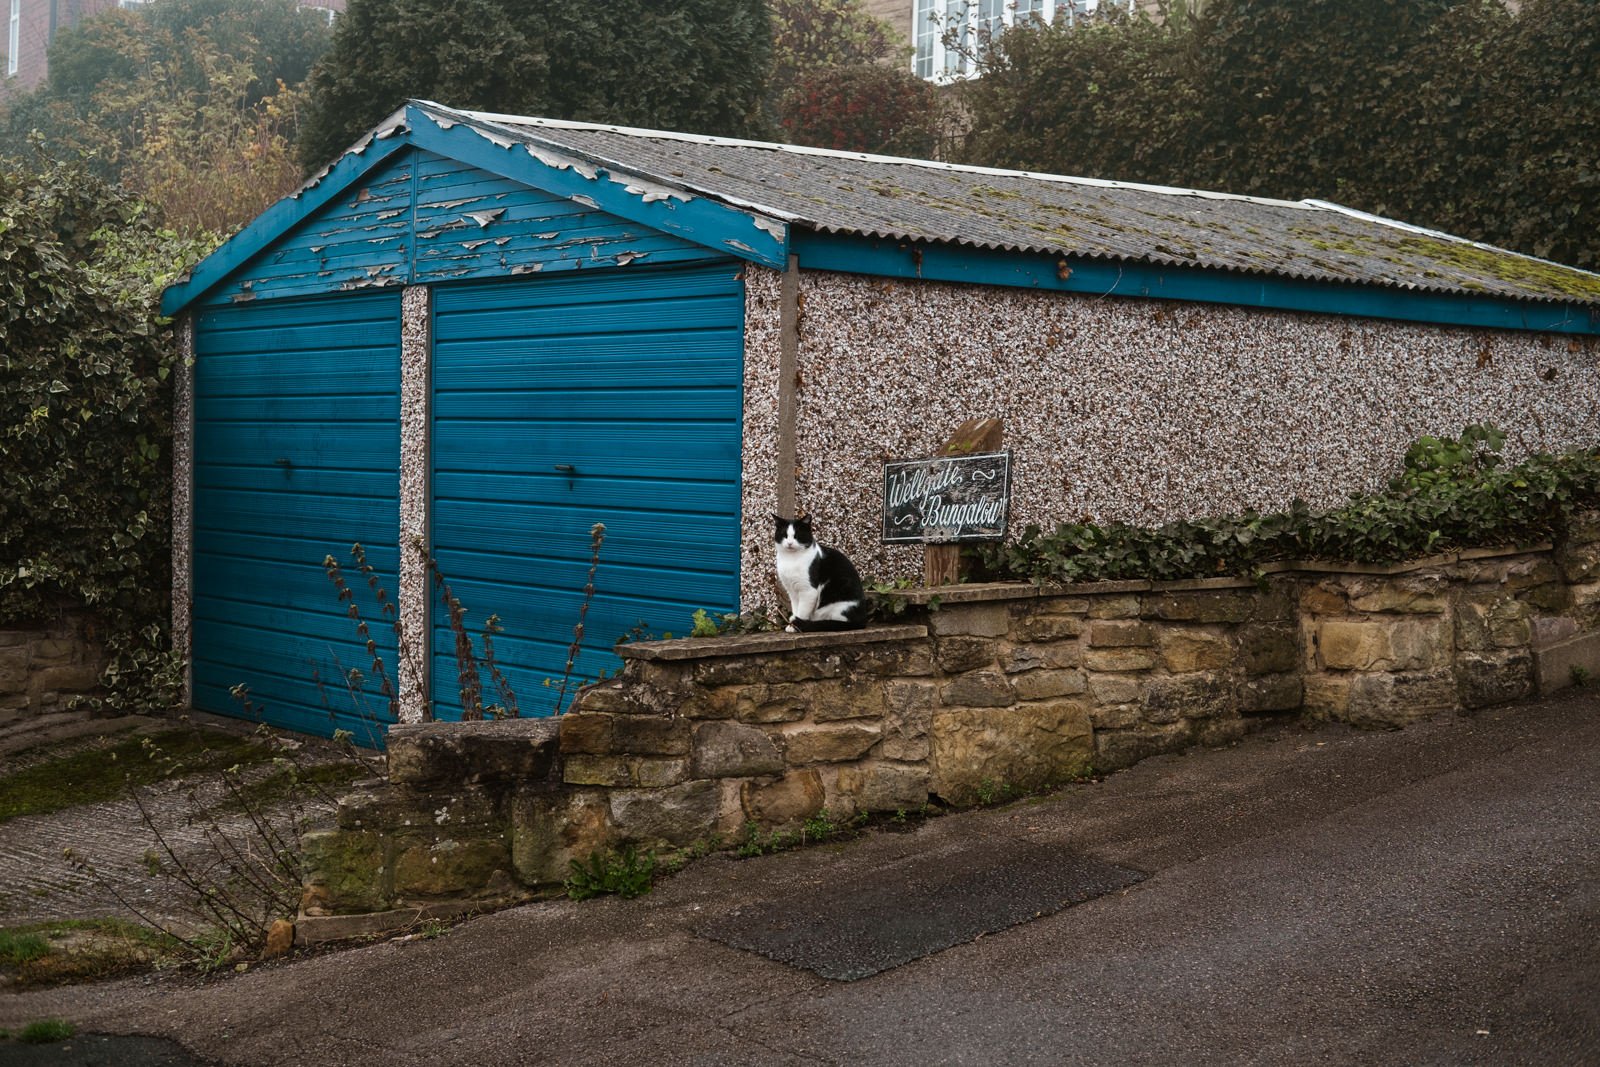 A cat next to a garage with blue doors